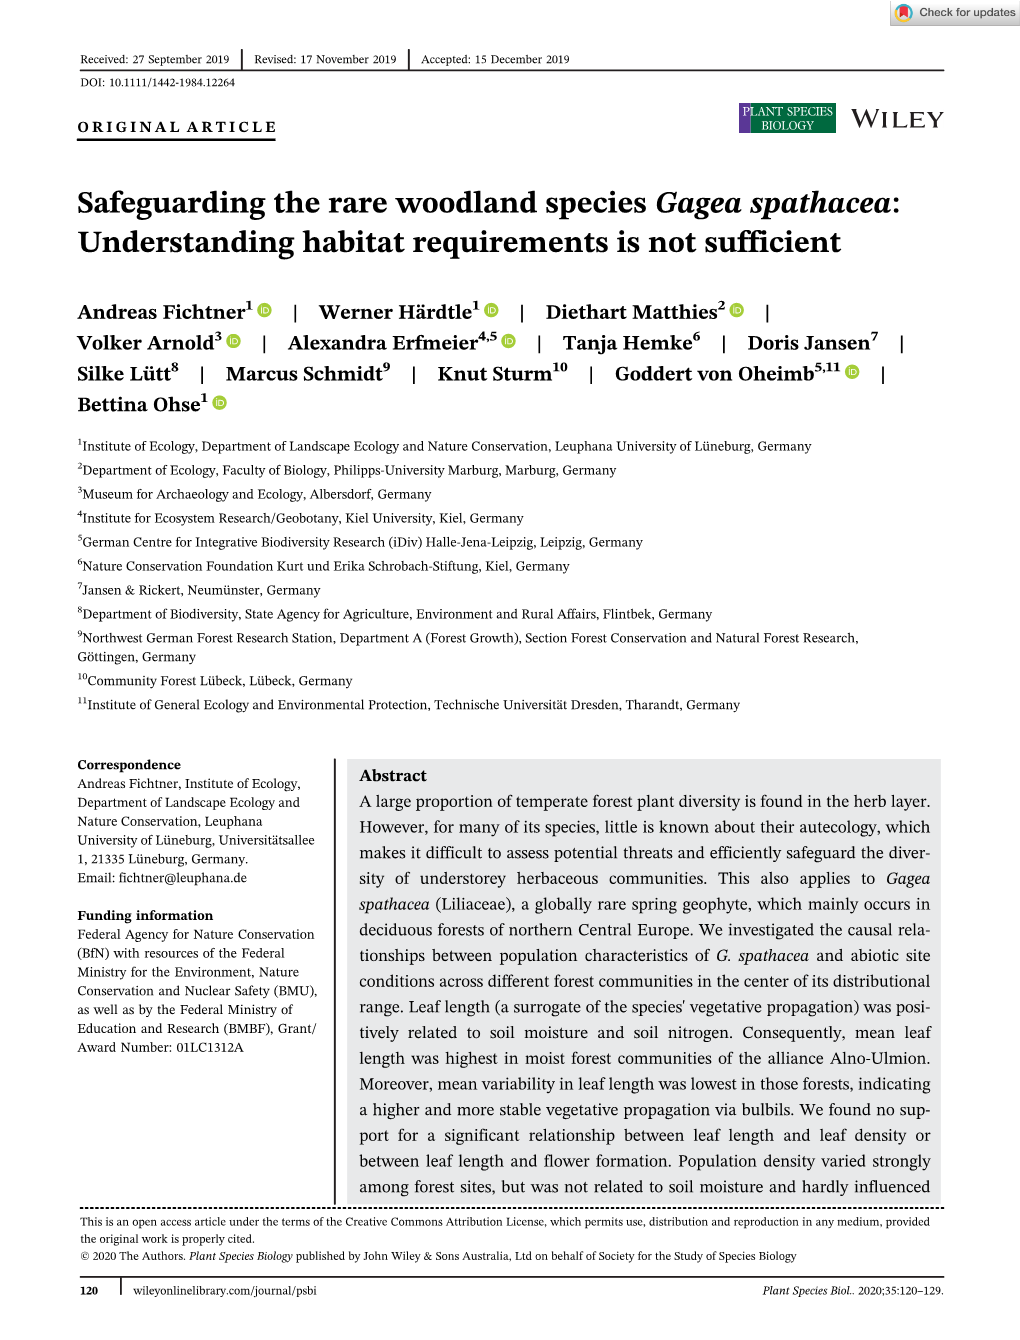 Safeguarding the Rare Woodland Species Gagea Spathacea: Understanding Habitat Requirements Is Not Sufficient